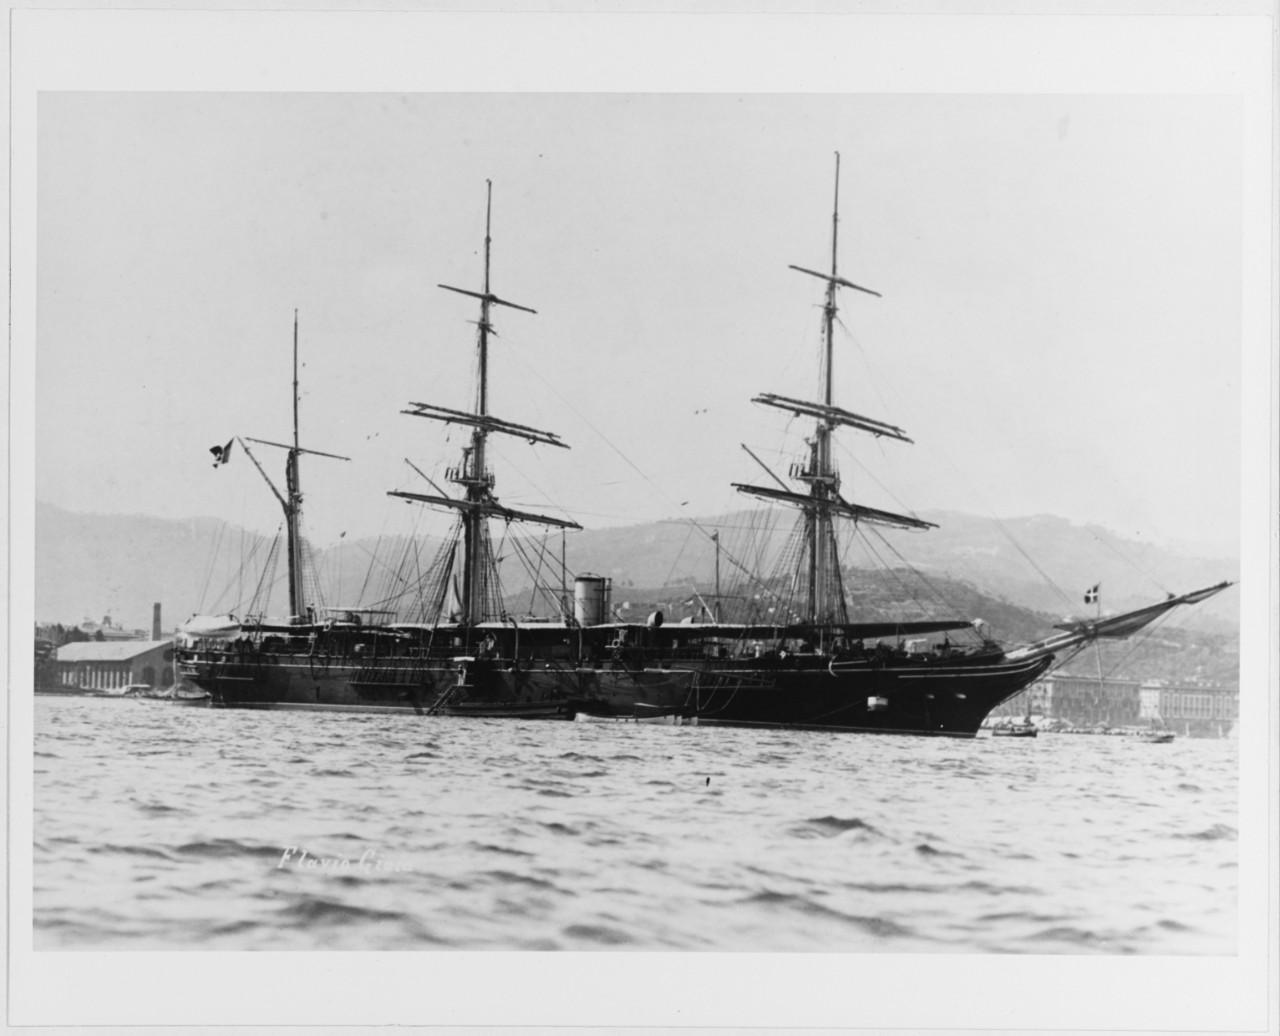 FLAVIO GIOIA (Italian cruiser, 1881)